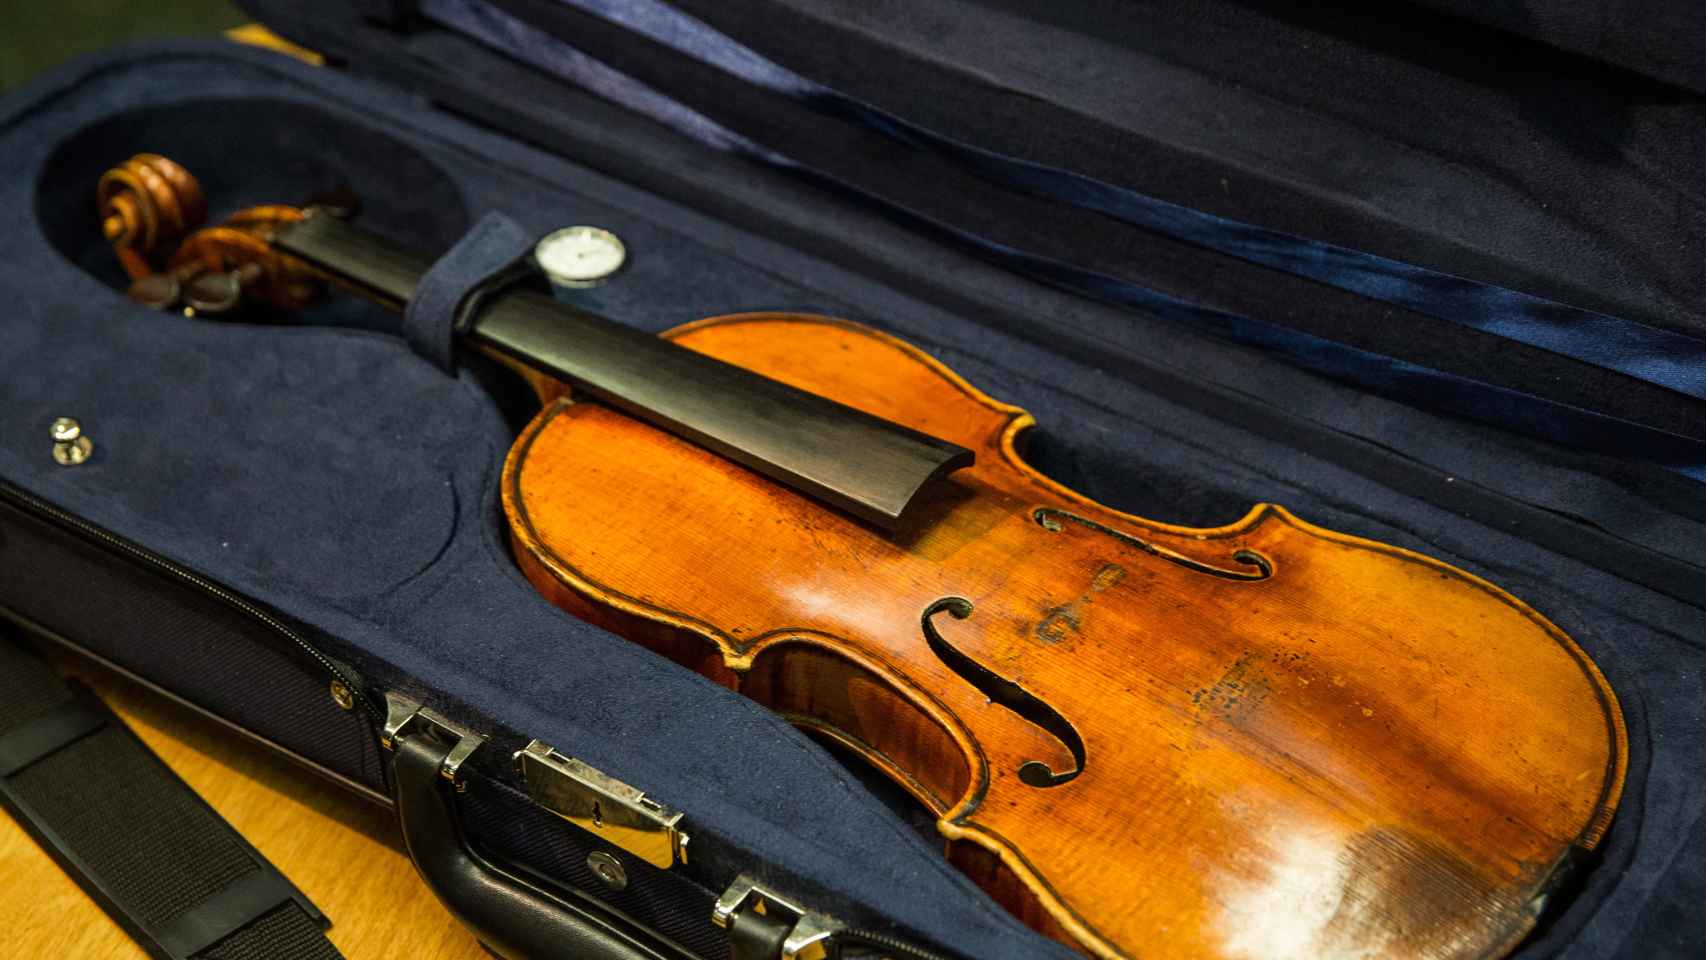 Un Stradivarius del violinista Roman Totenberg